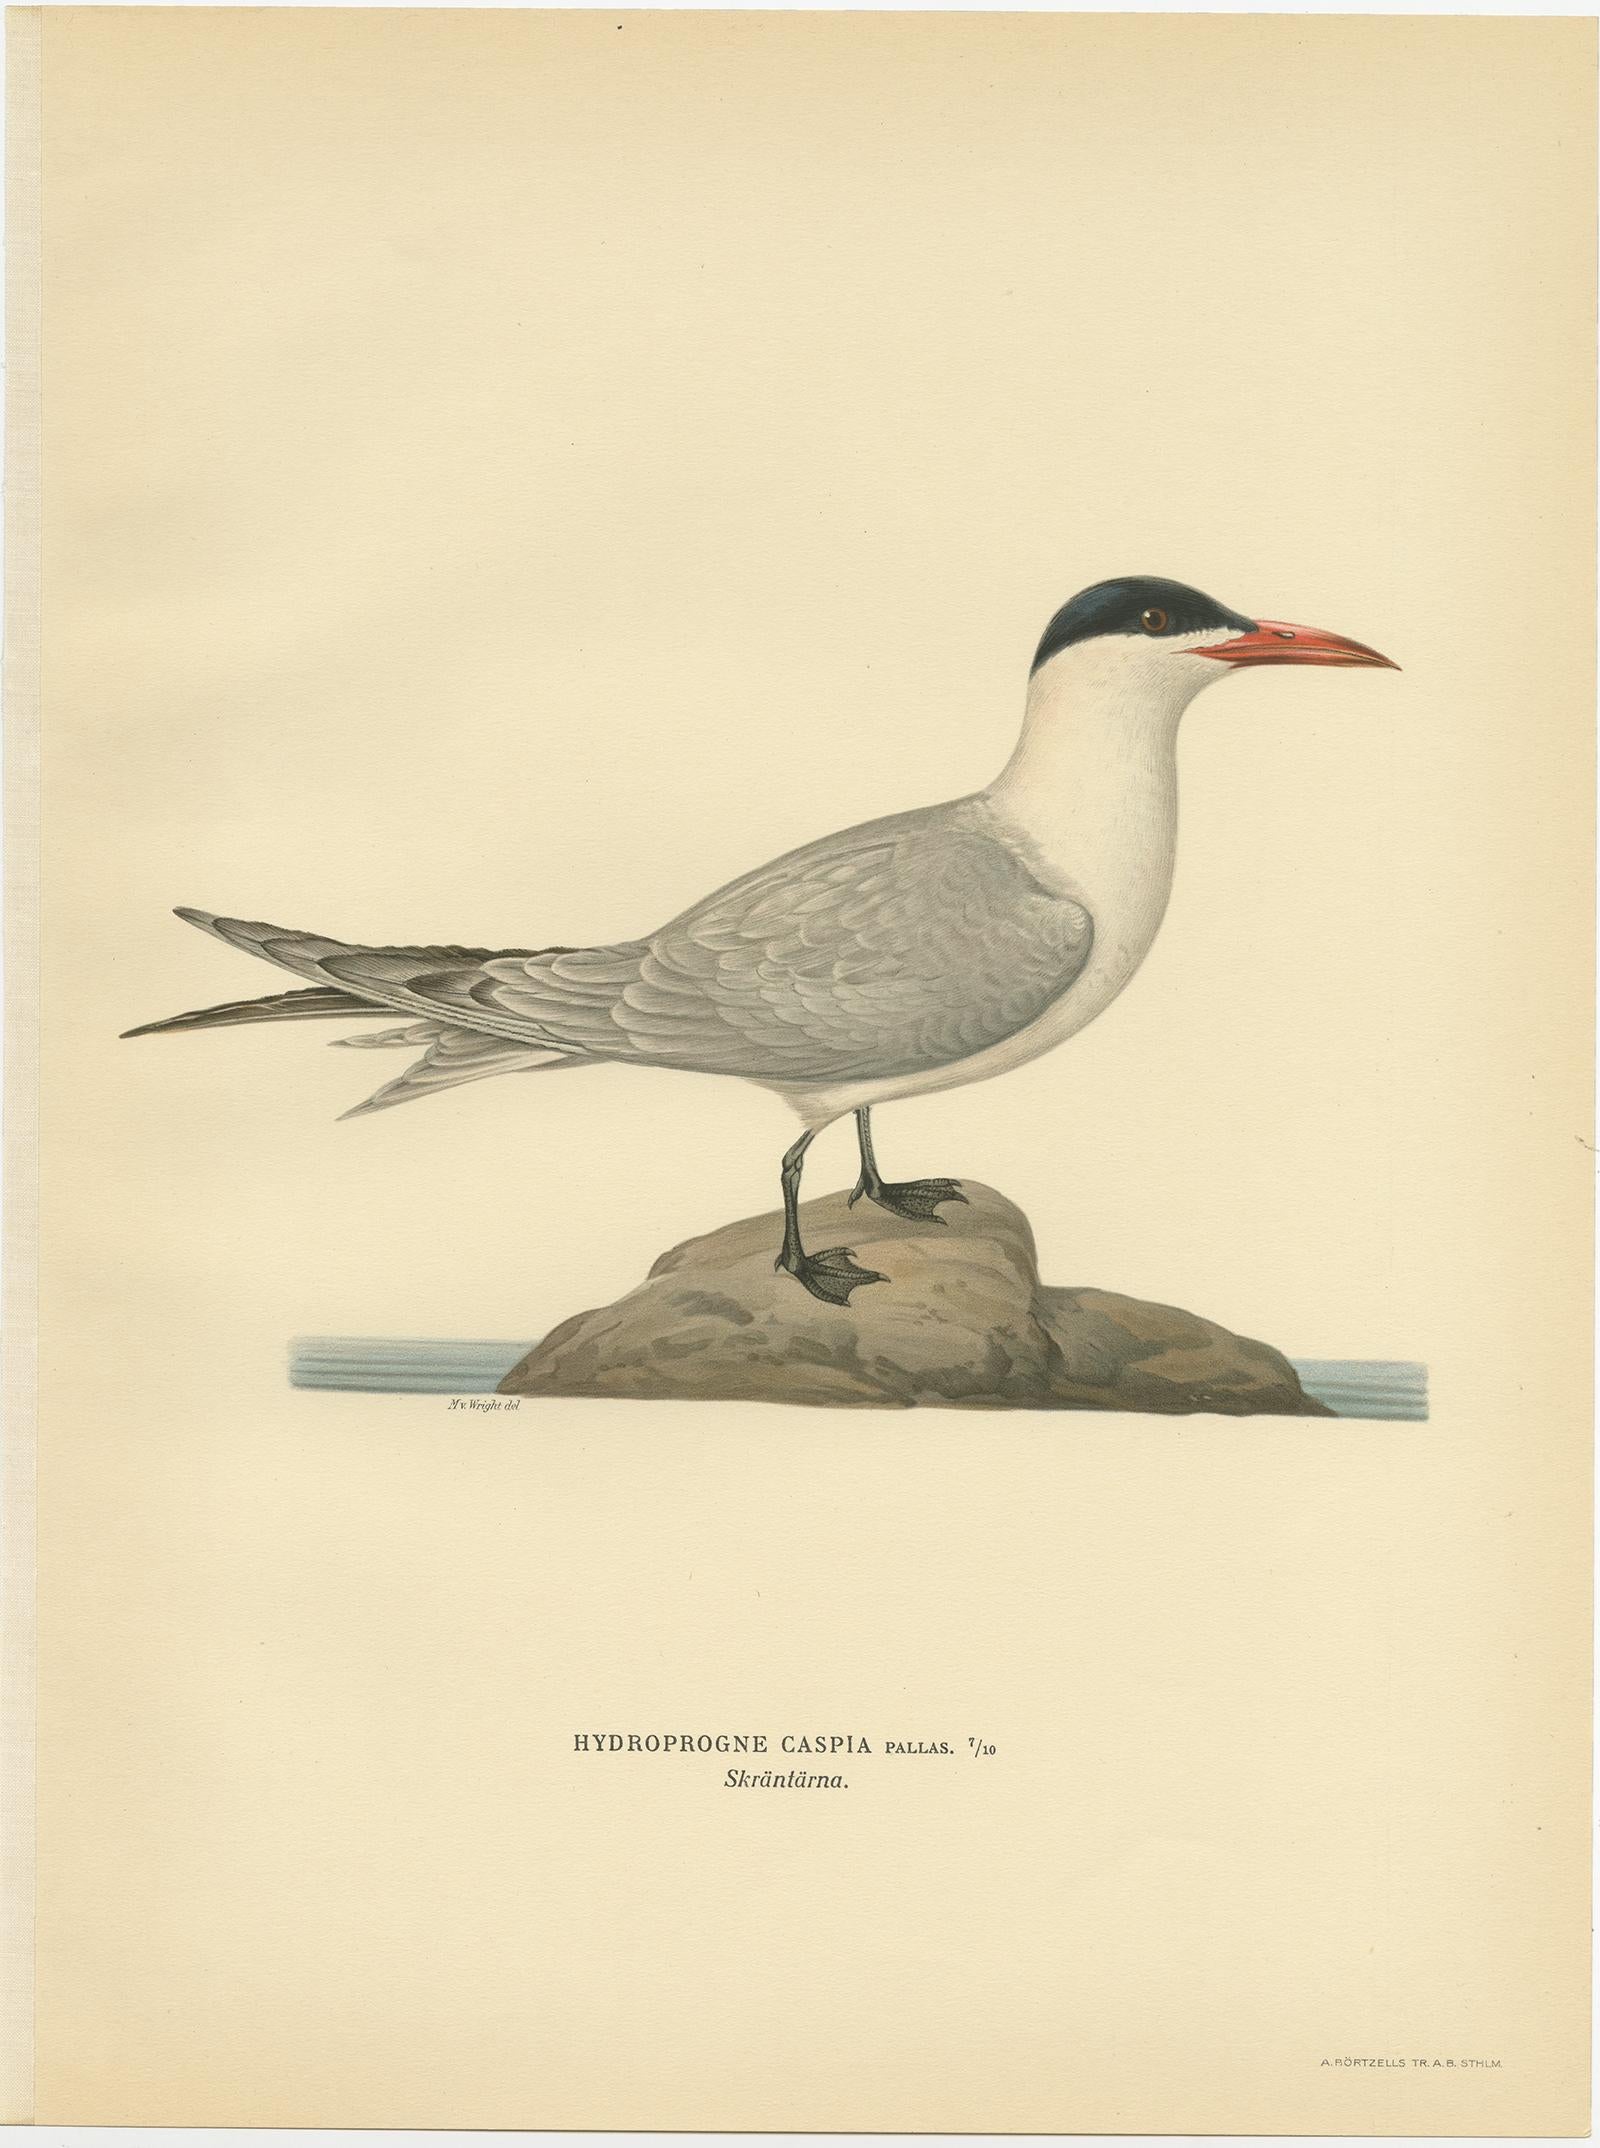 Antique bird print titled 'Hydroprogne Caspia'. Old bird print depicting the Caspian Tern. This print originates from 'Svenska Foglar Efter Naturen Och Pa Stenritade' by Magnus von Wright.